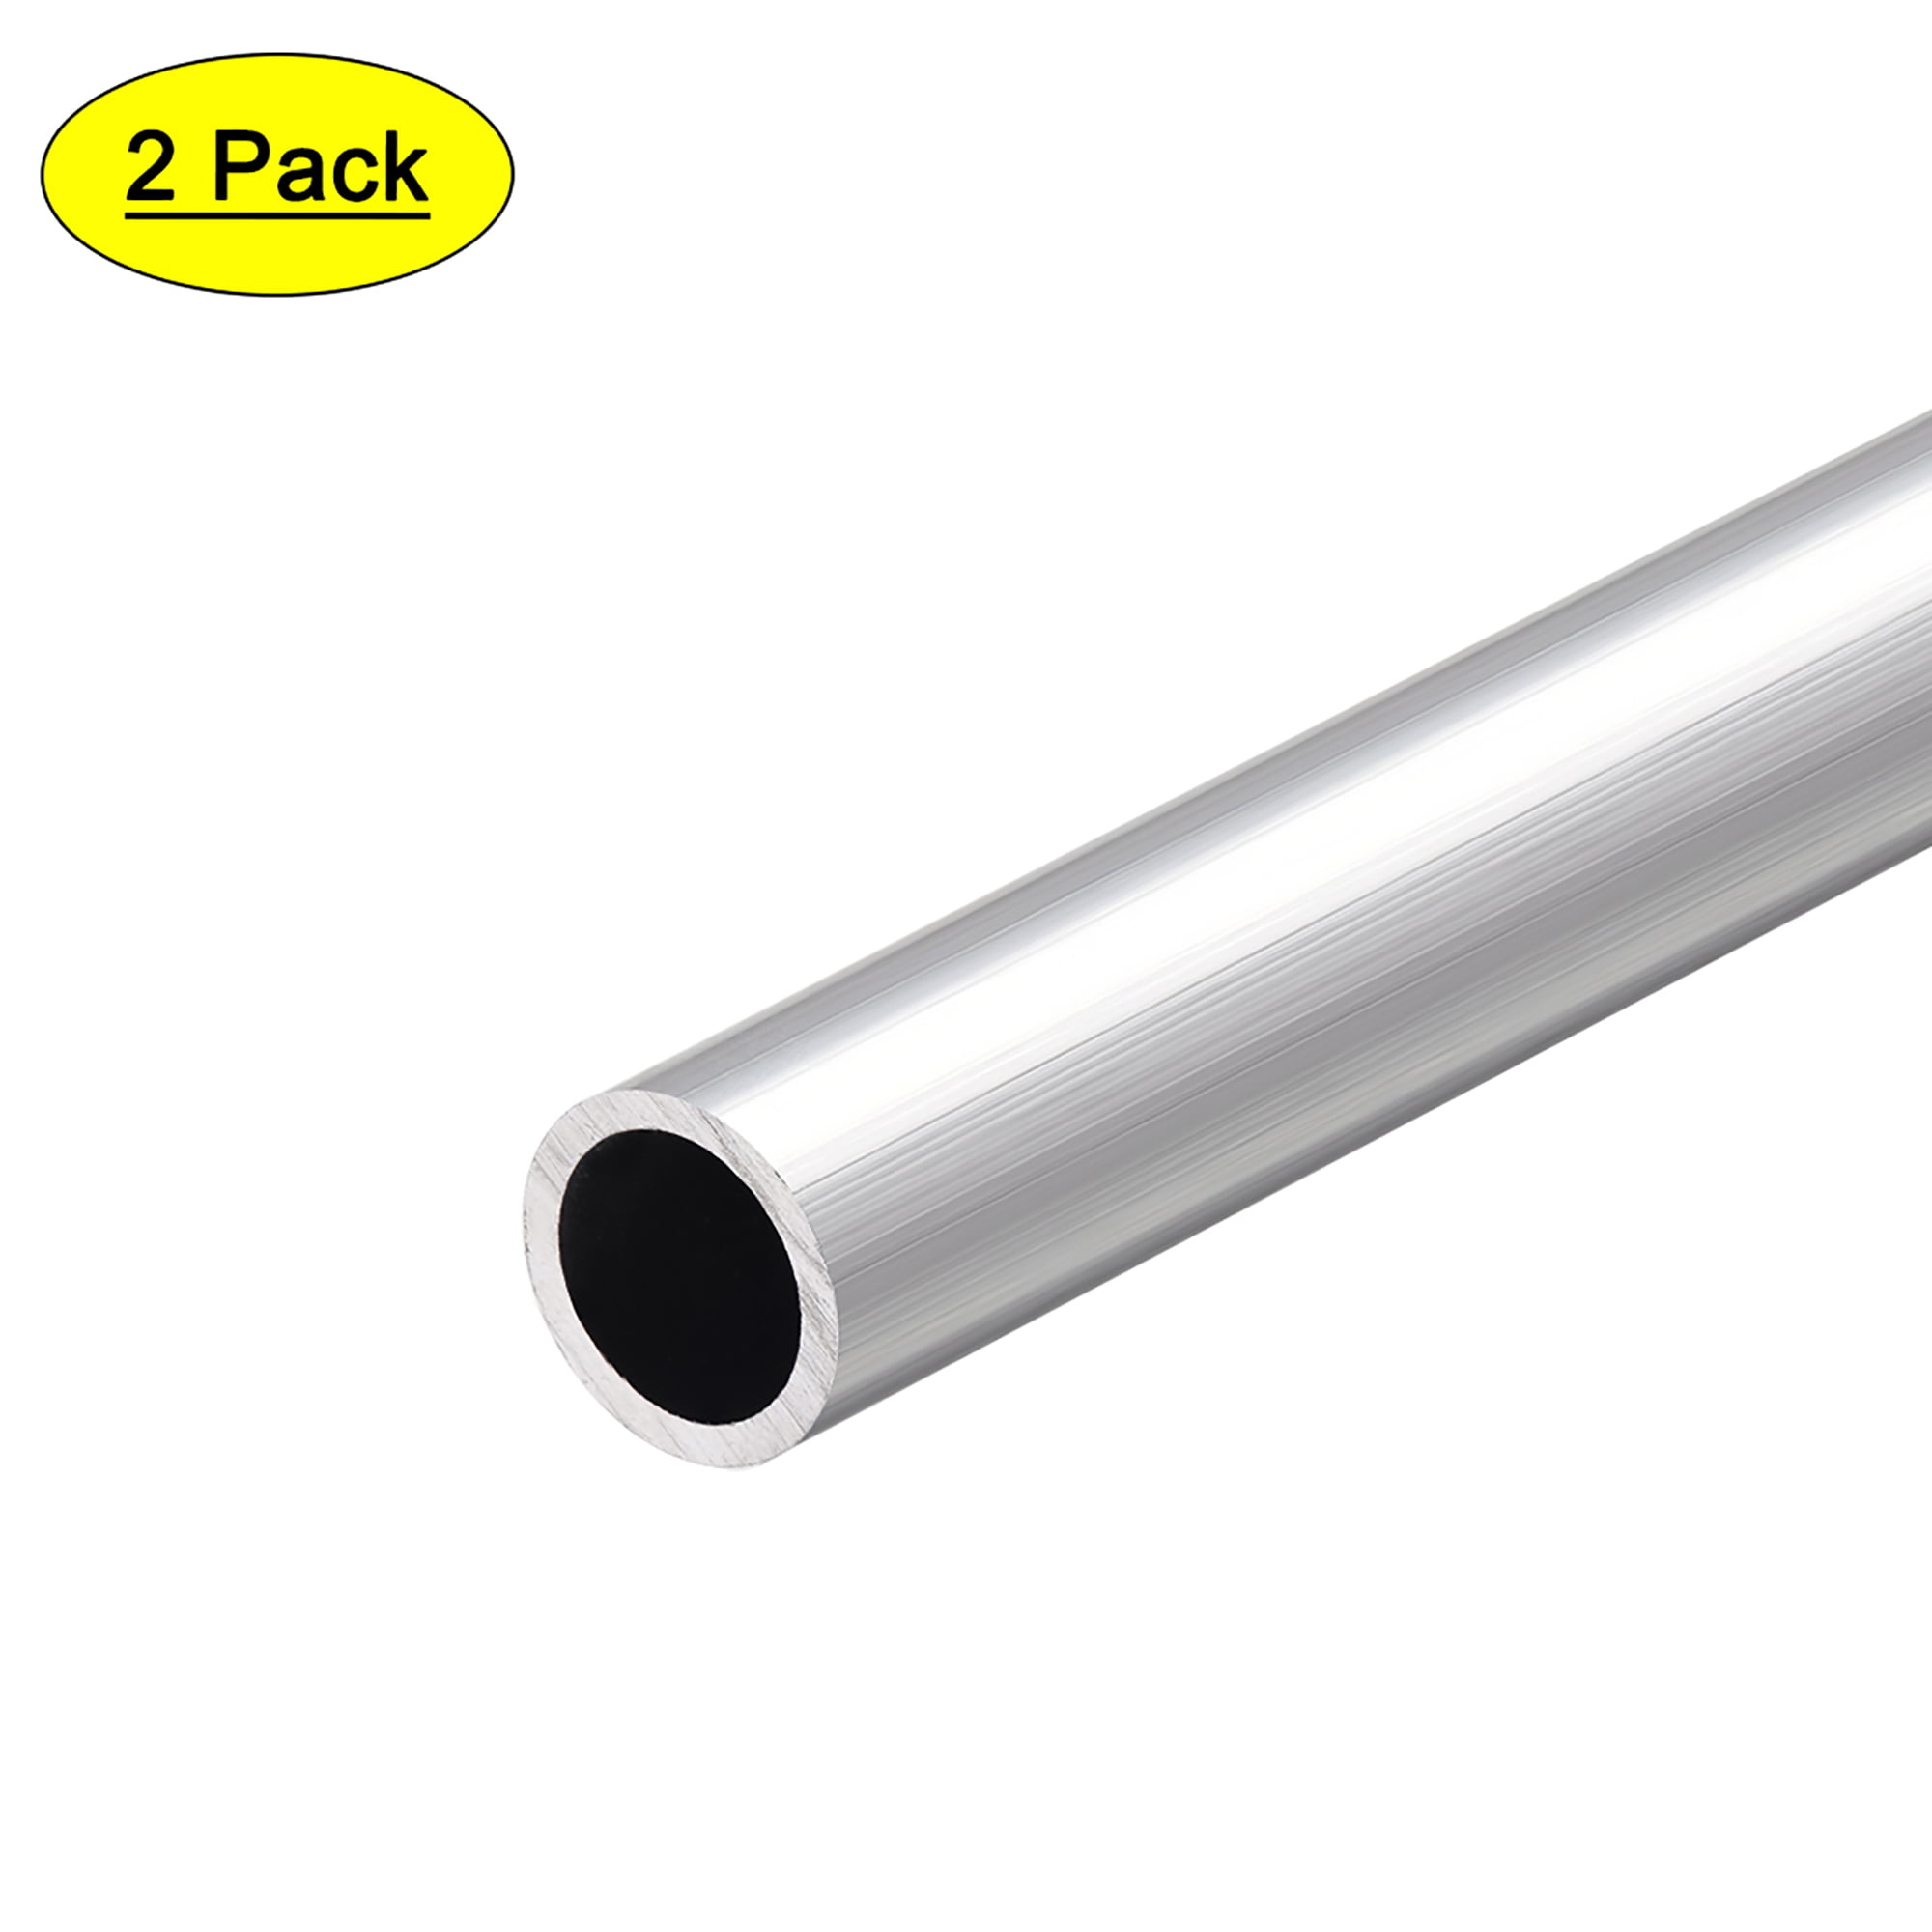 Round aluminium bar rod Pack 3/8" 1/2" 5/8" 3/4" Model engineer Milling lathe 